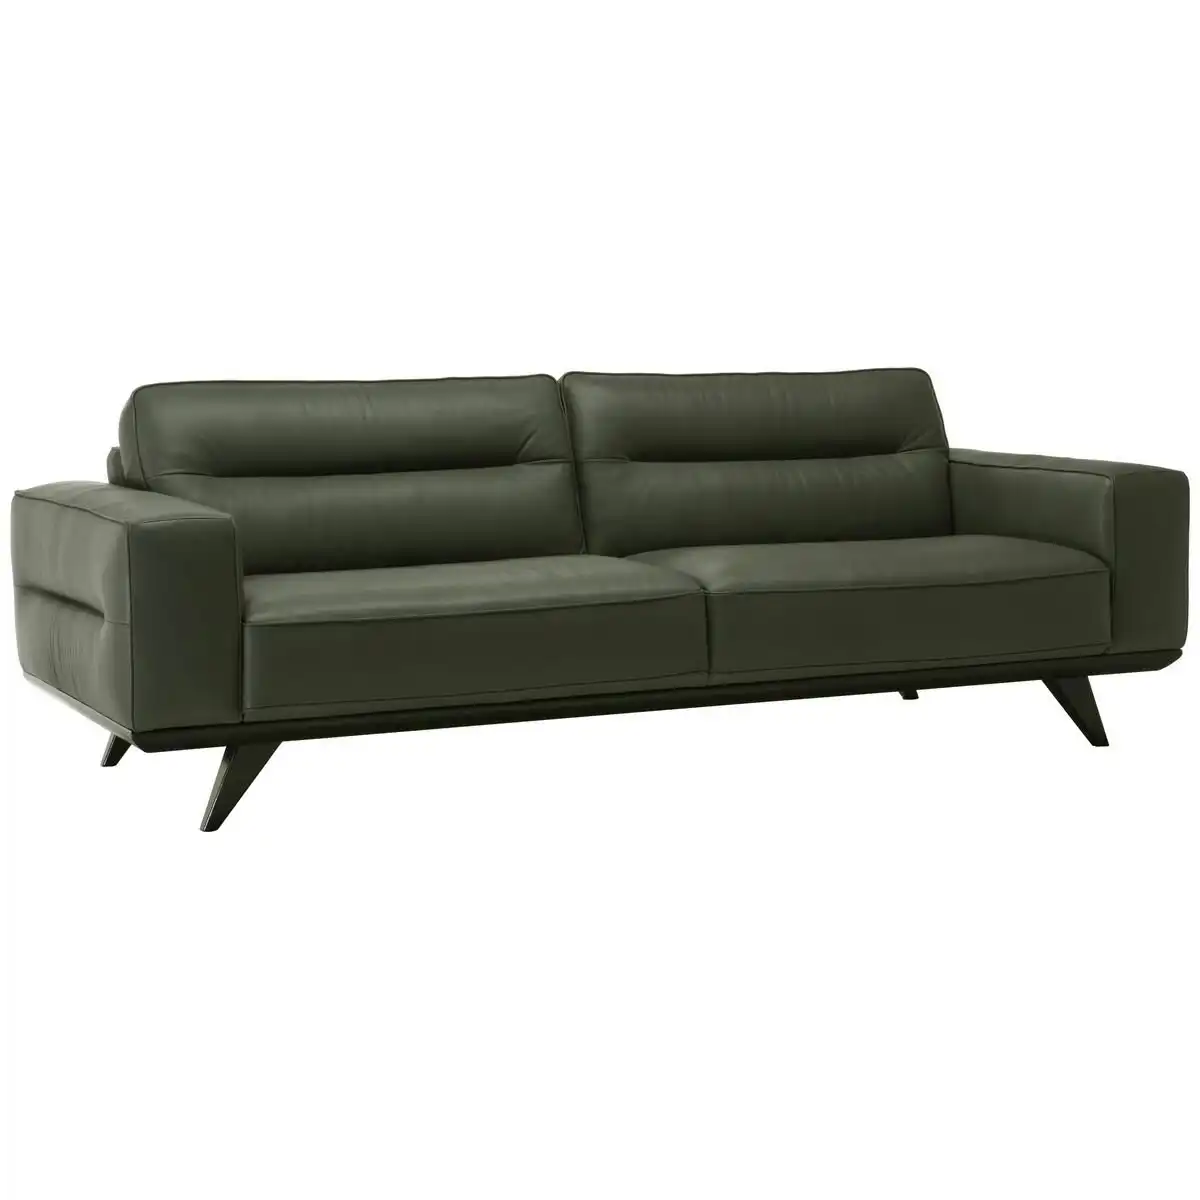 Natuzzi Editions Adrenalina Taupe Leather Sofa 3 Seater